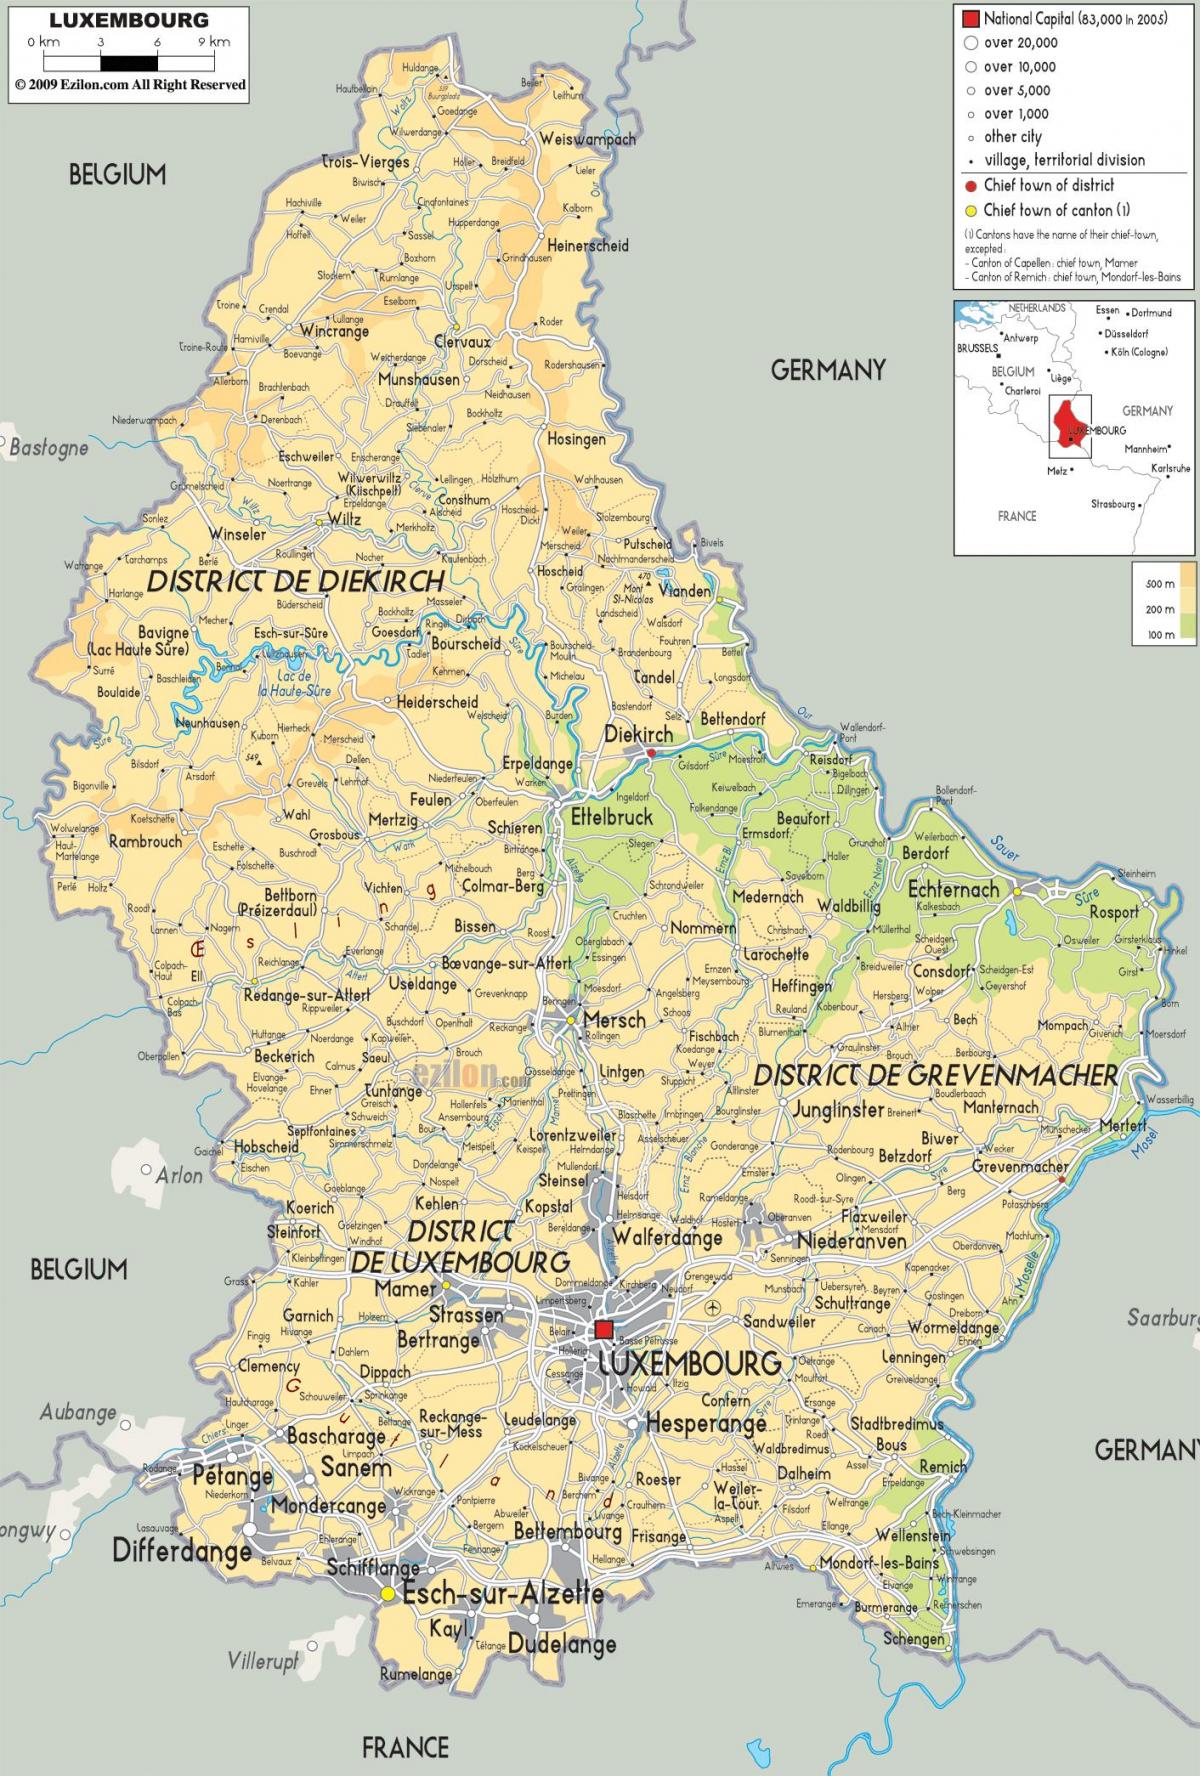 mapa ng Luxembourg pisikal na